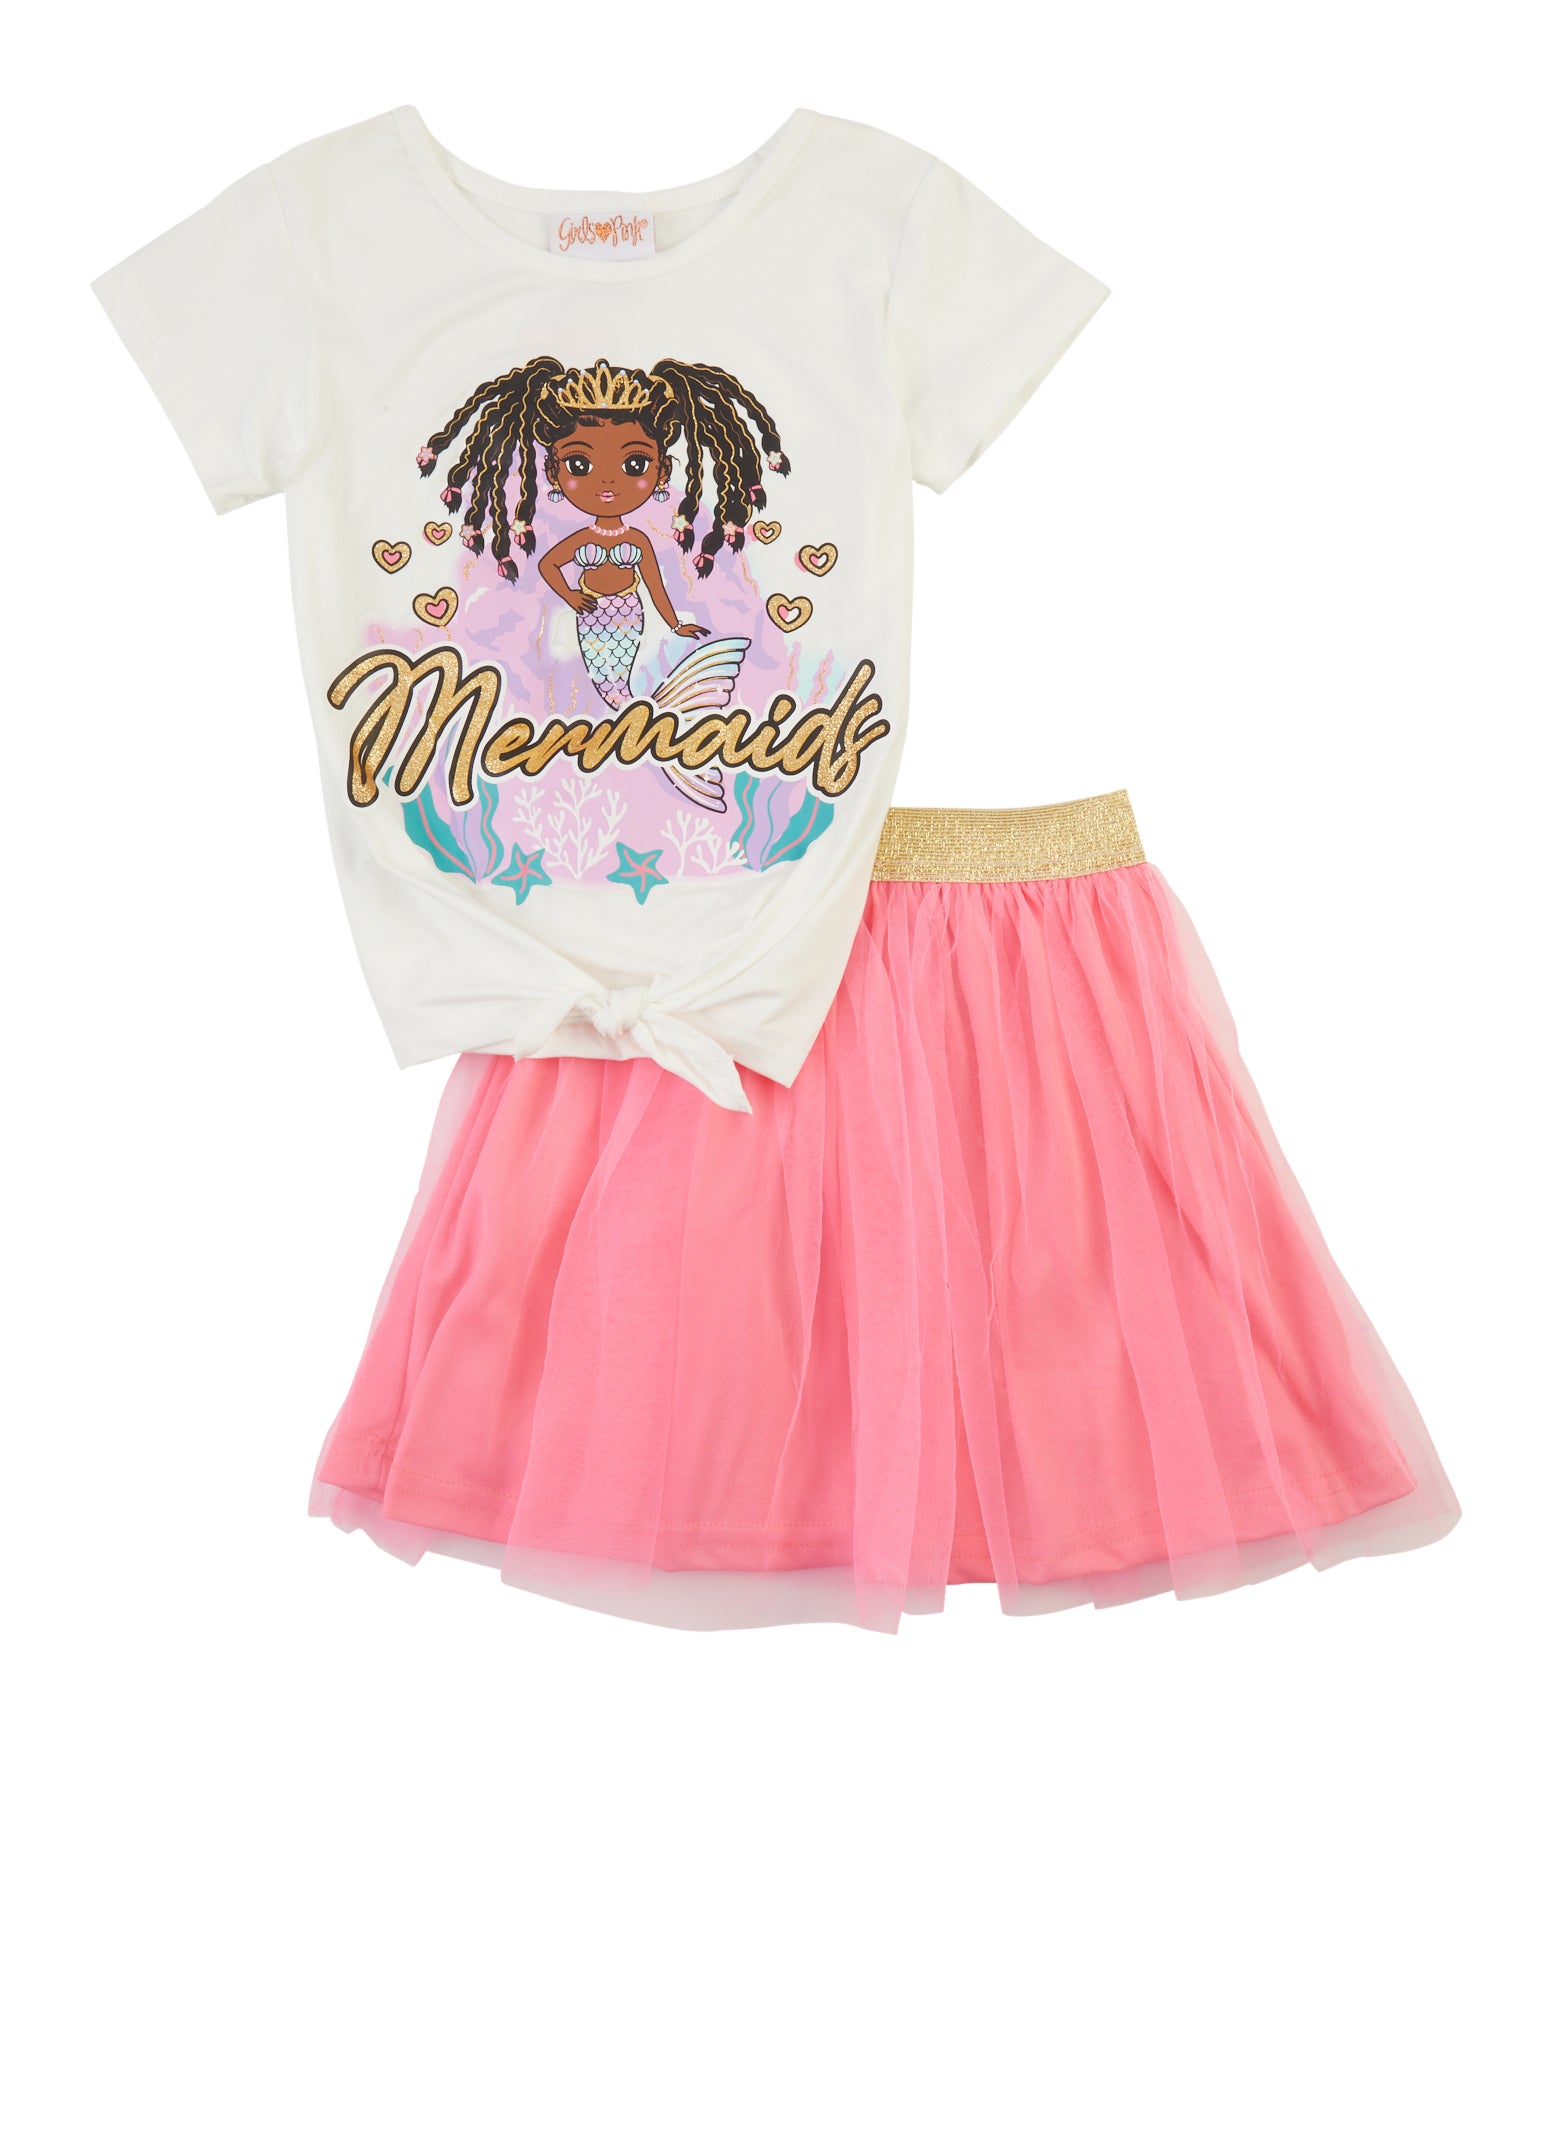 Little Girls Mermaid Glitter Graphic Tee and Tutu Skirt, Pink, Size 4